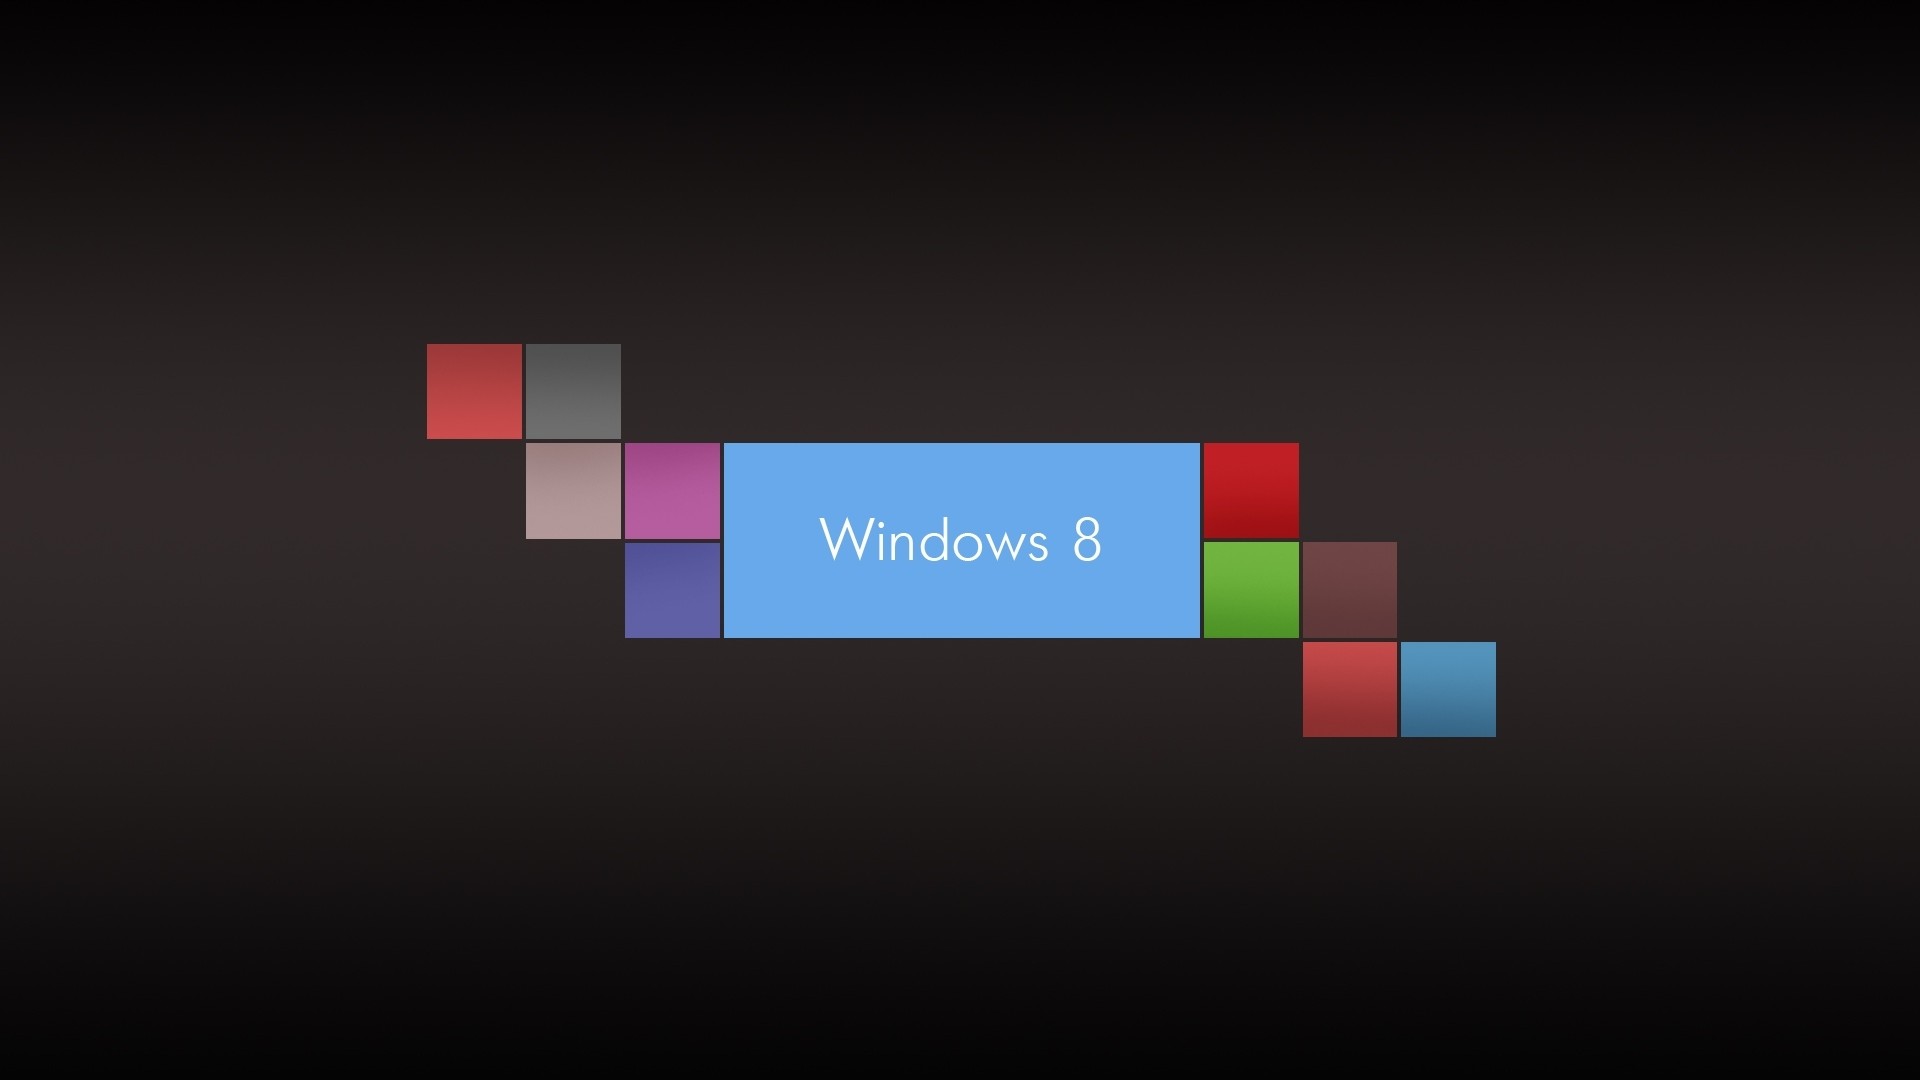 Windows 8 Small Logo Image Wallpaper High Resolution